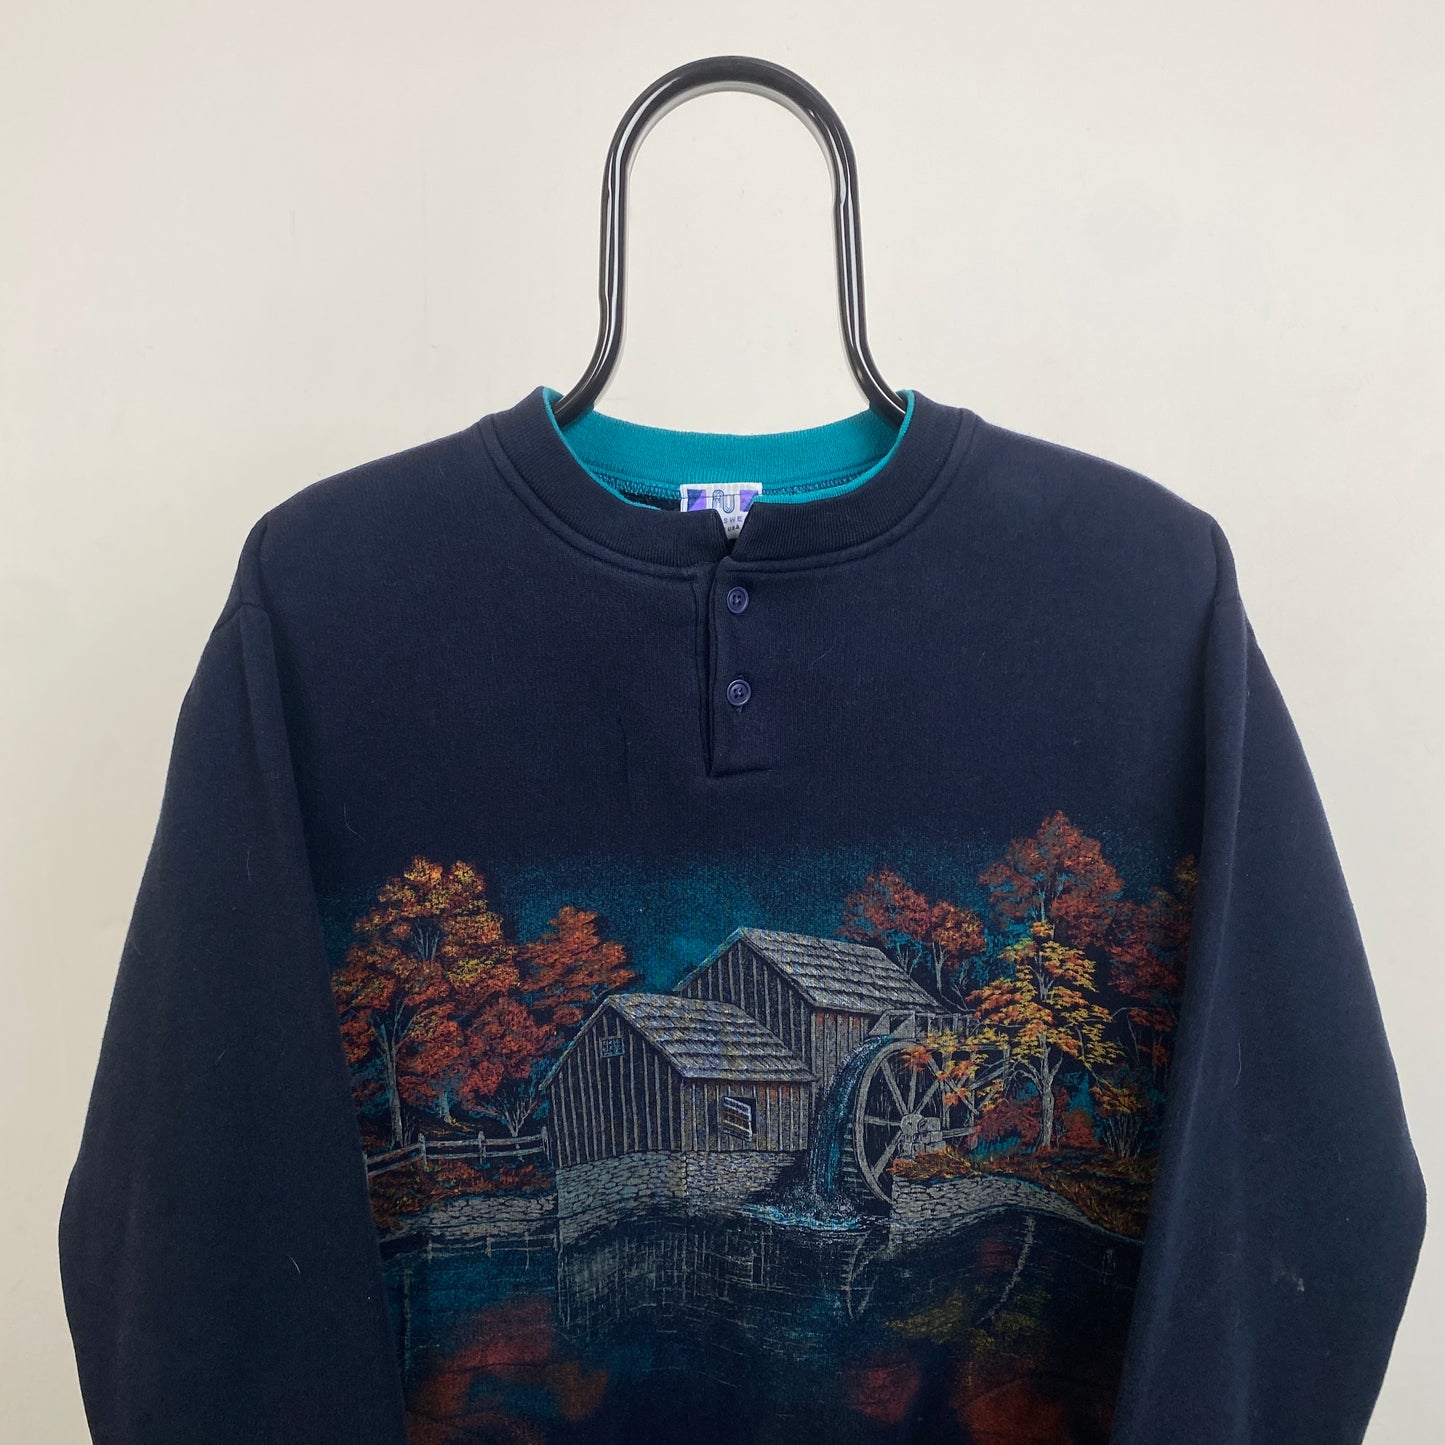 Retro 90s All Over Print Sweatshirt Blue Large